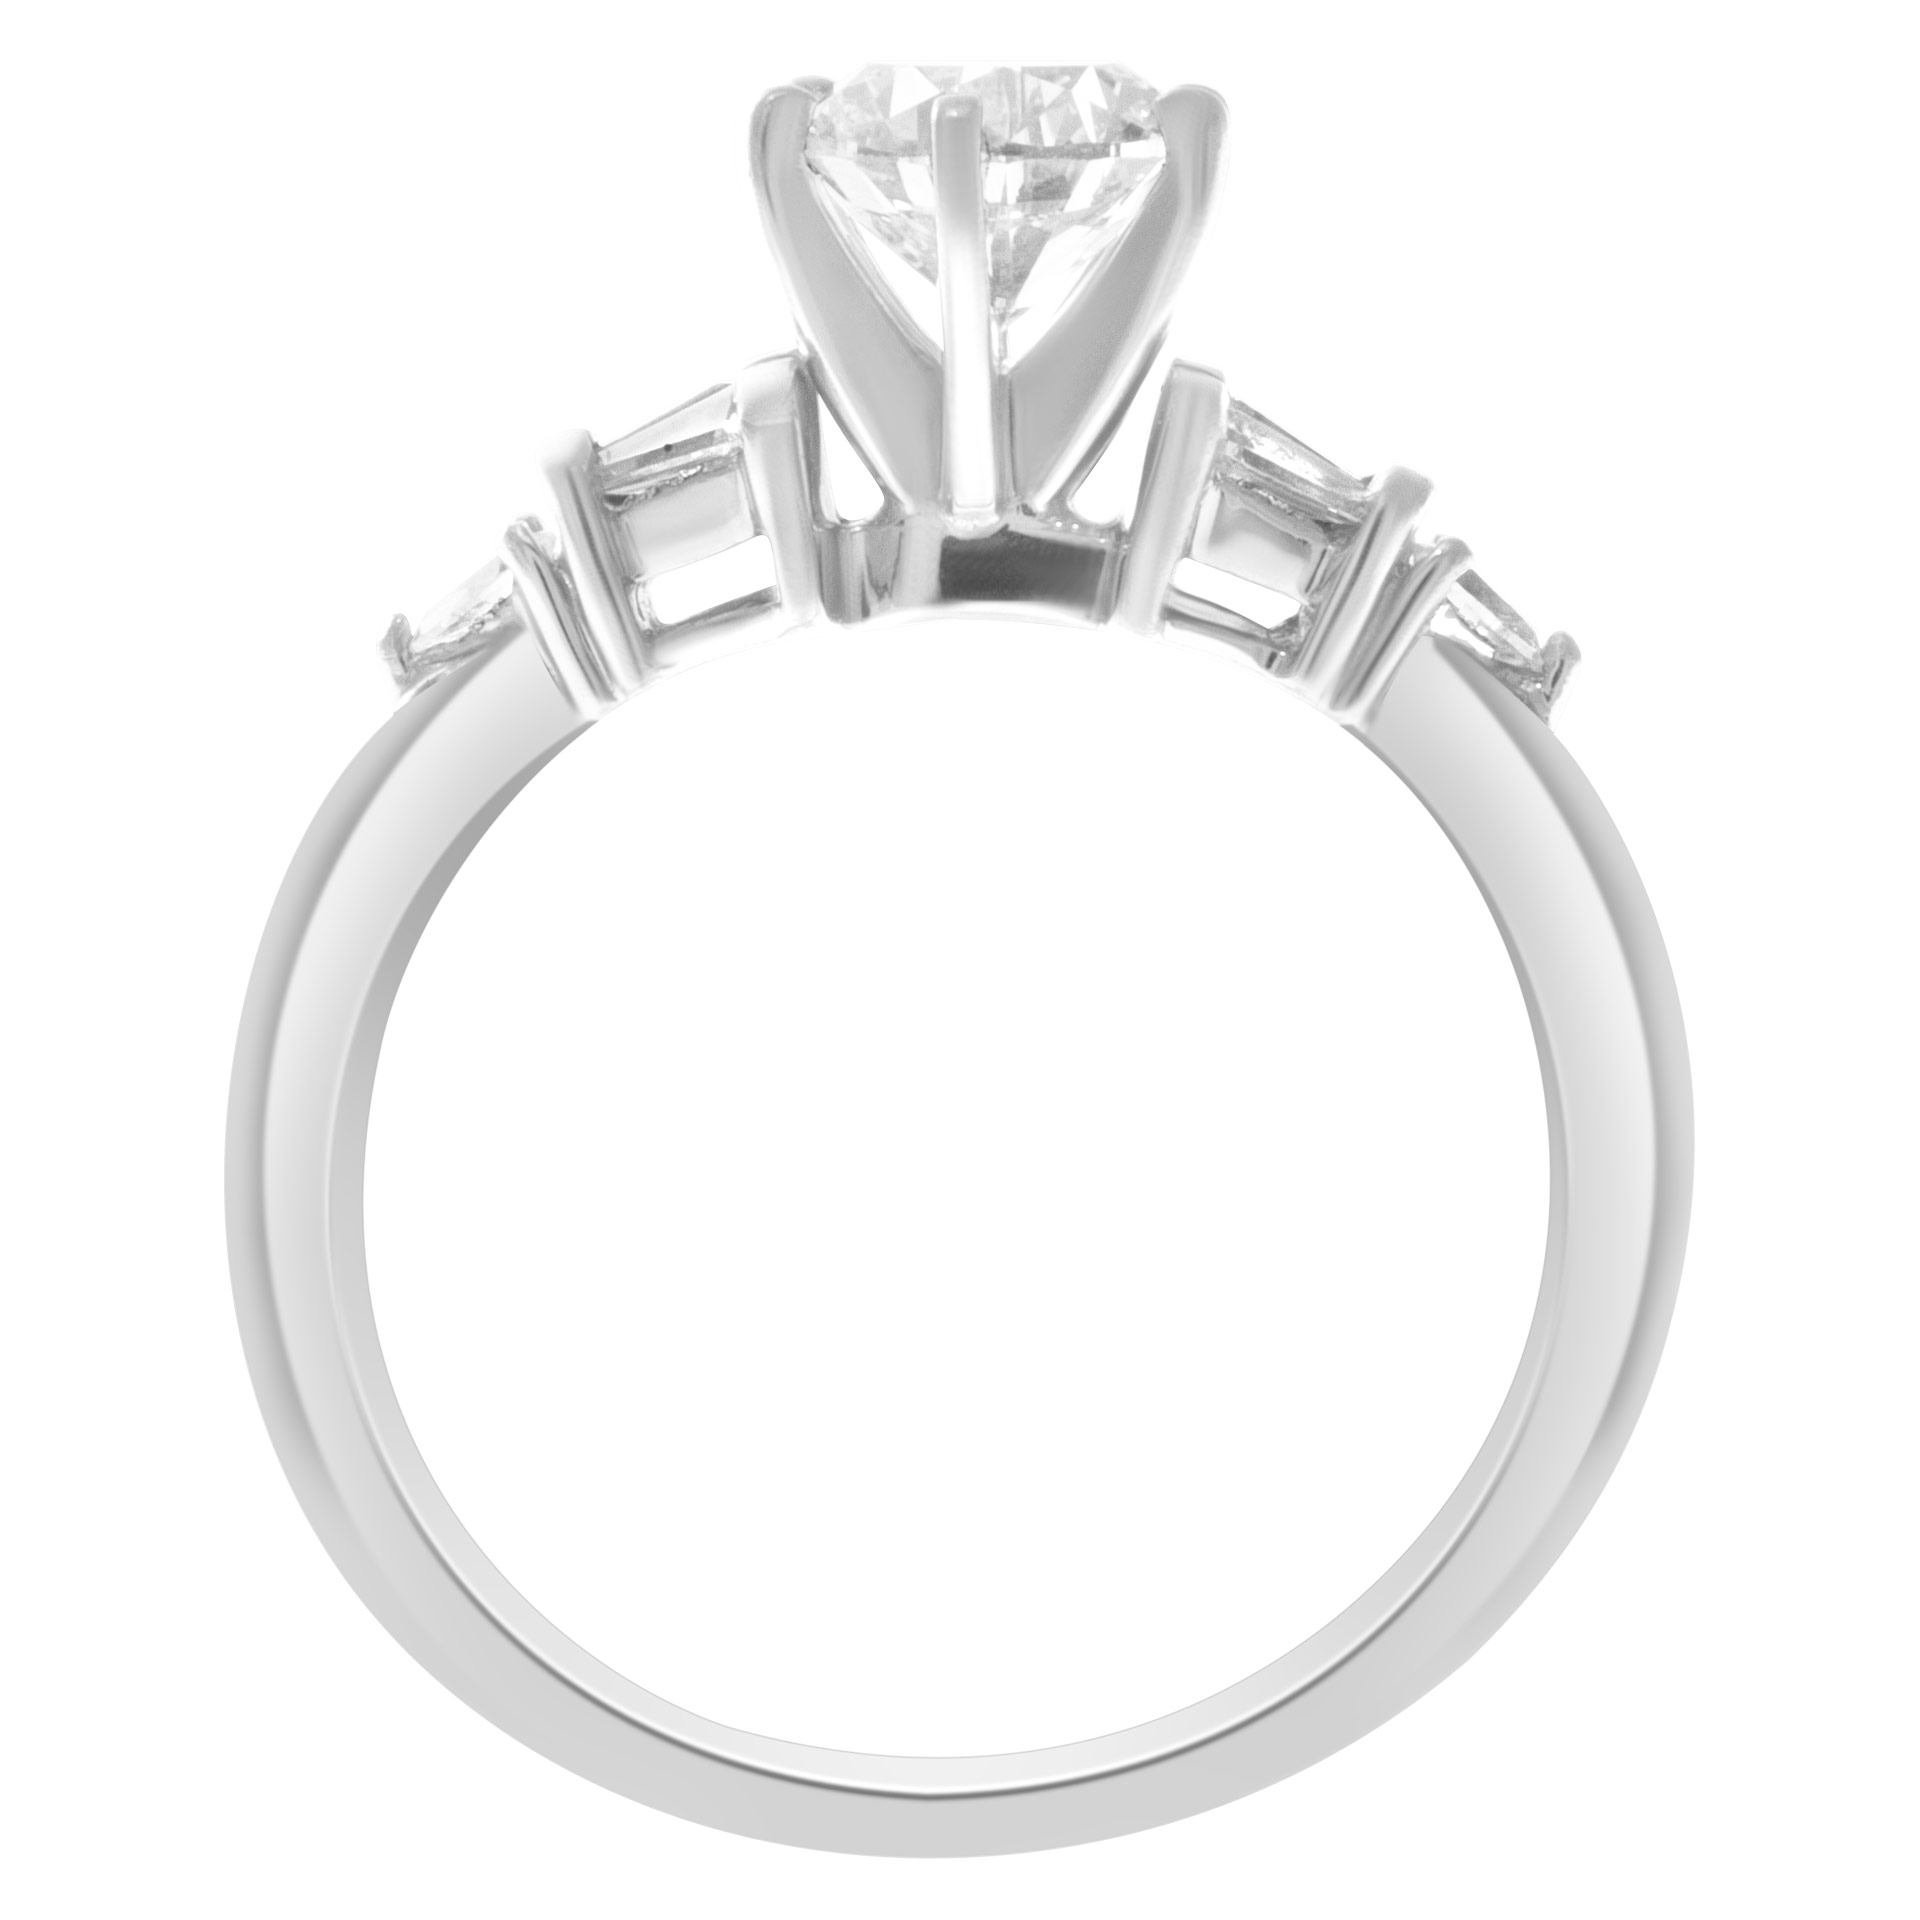 Diamond ring in platinum. 1ct center diamond (I color, SI1 clarity) w/ diamond accents image 3